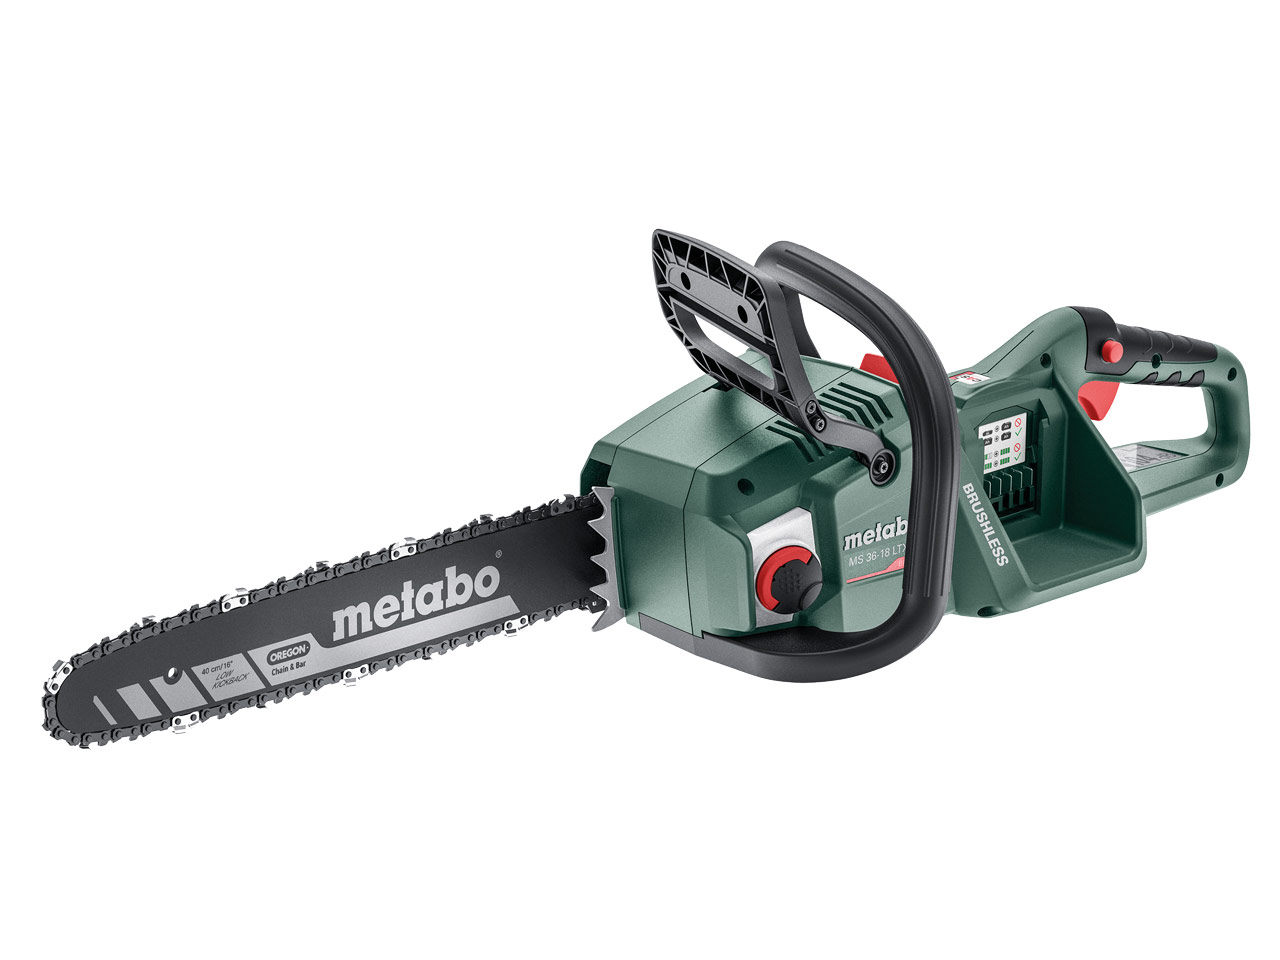 Metabo Metabo MS36-18LTXBL40 18V 400mm BL Cordless Chainsaw Bare